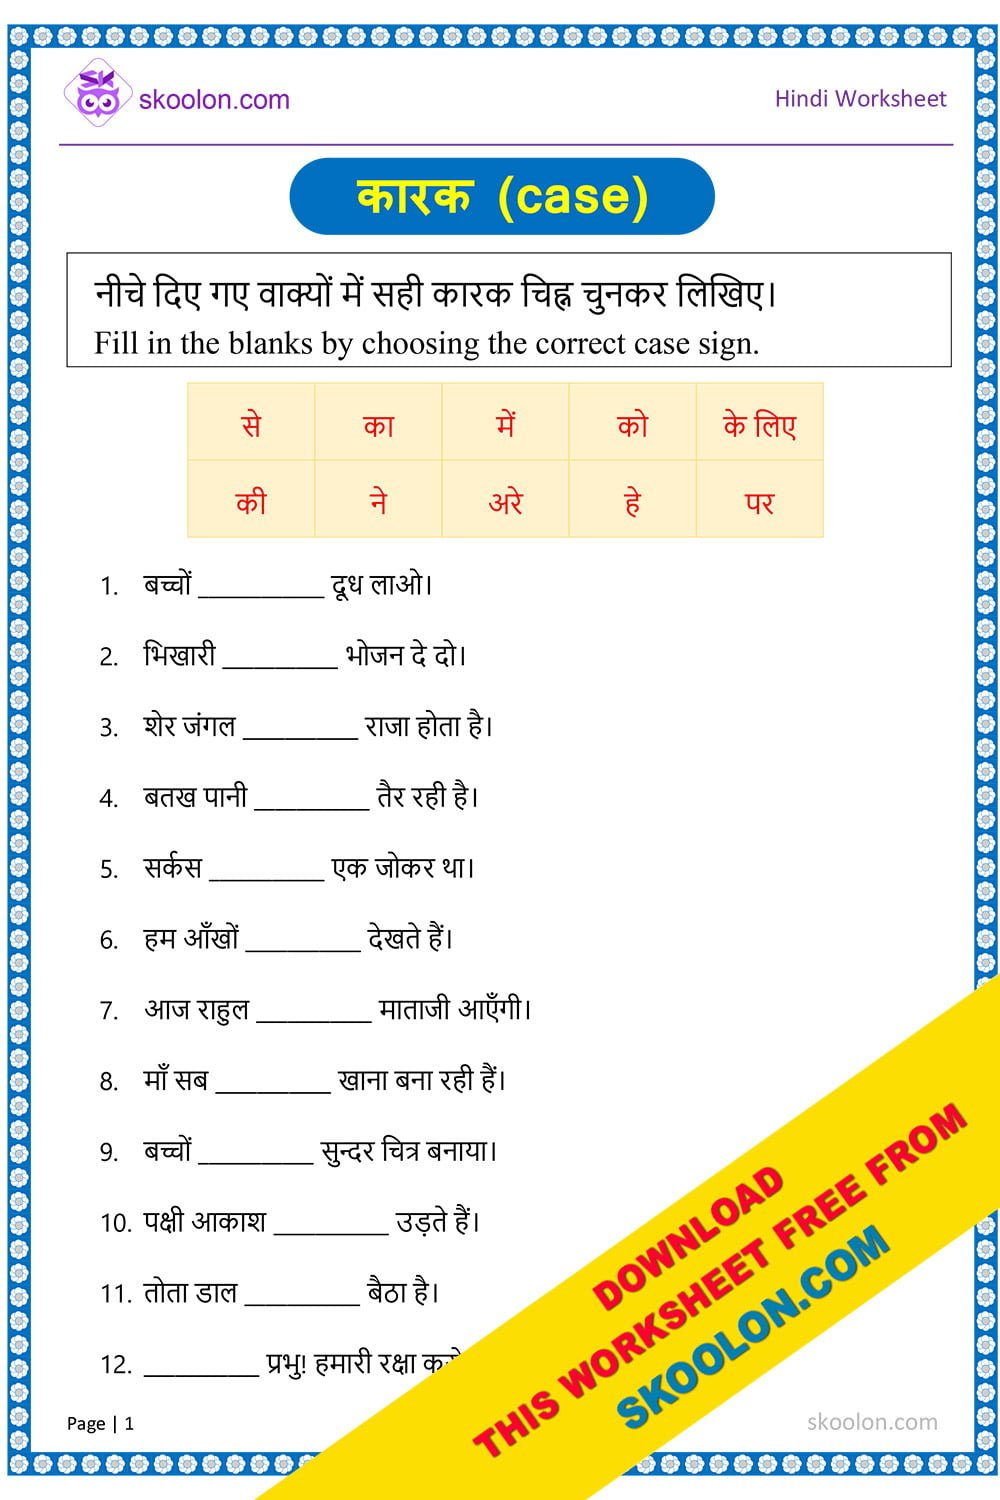 Karak Hindi Grammar Worksheet-10 - skoolon.com